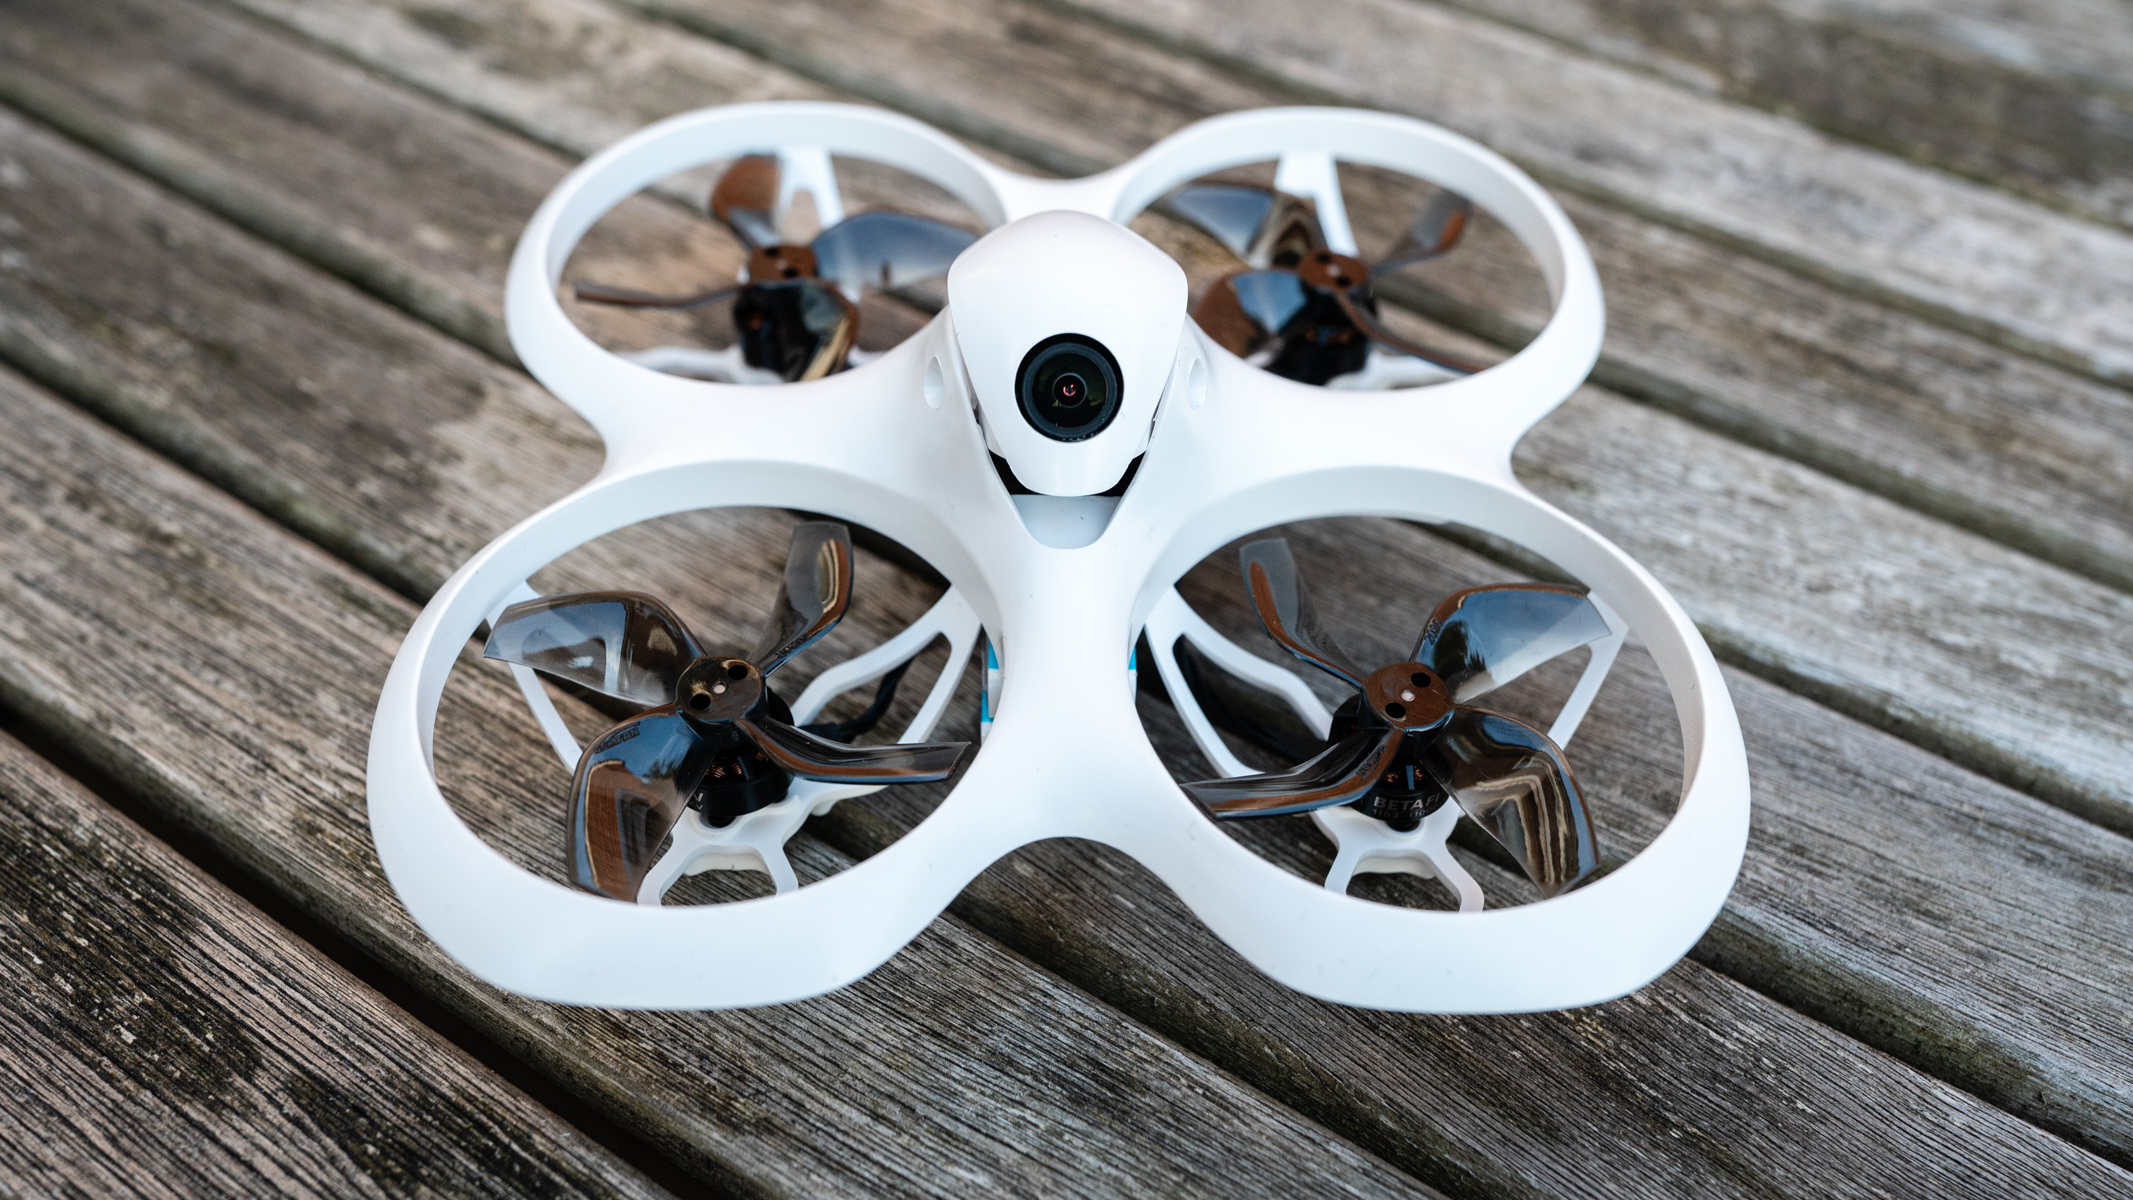 BETAFPV Cetus X FPV Kit (Hands-on Review) – Droneblog